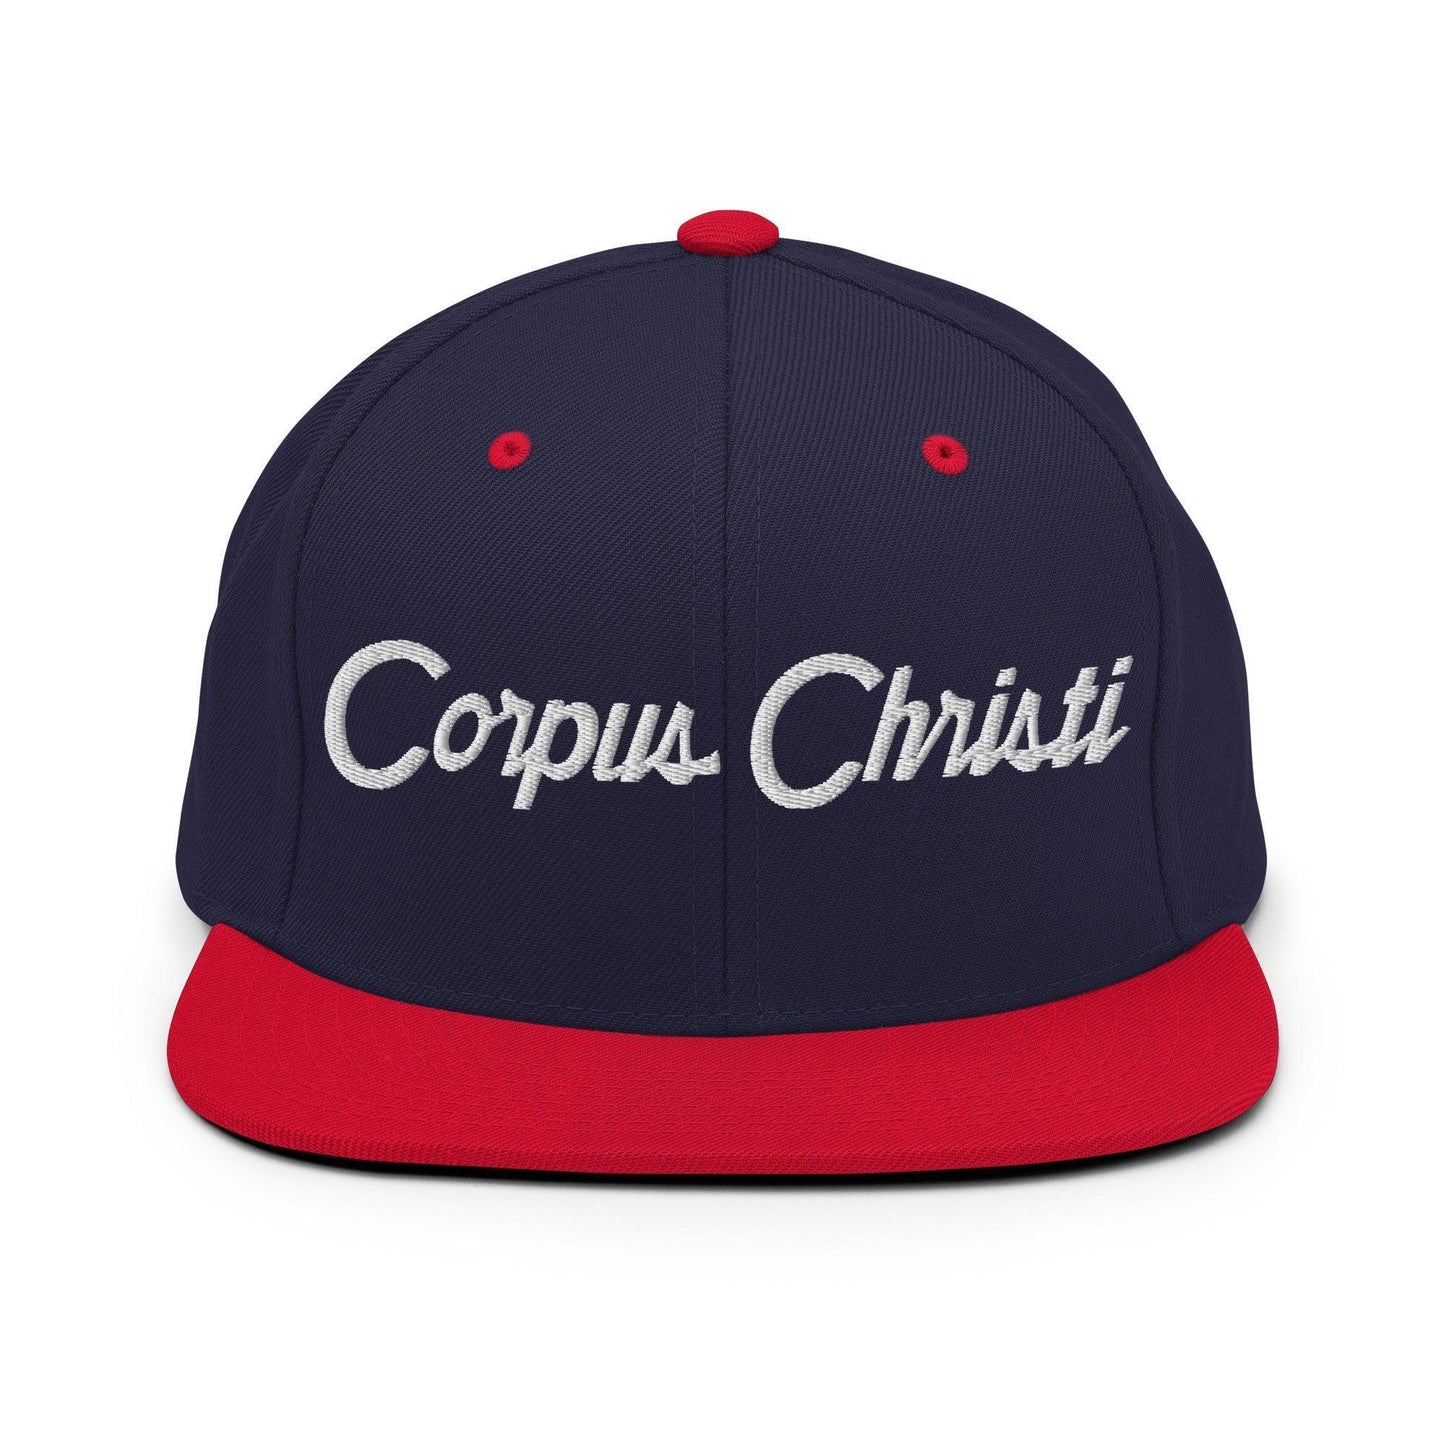 Corpus Christi Script Snapback Hat Navy Red